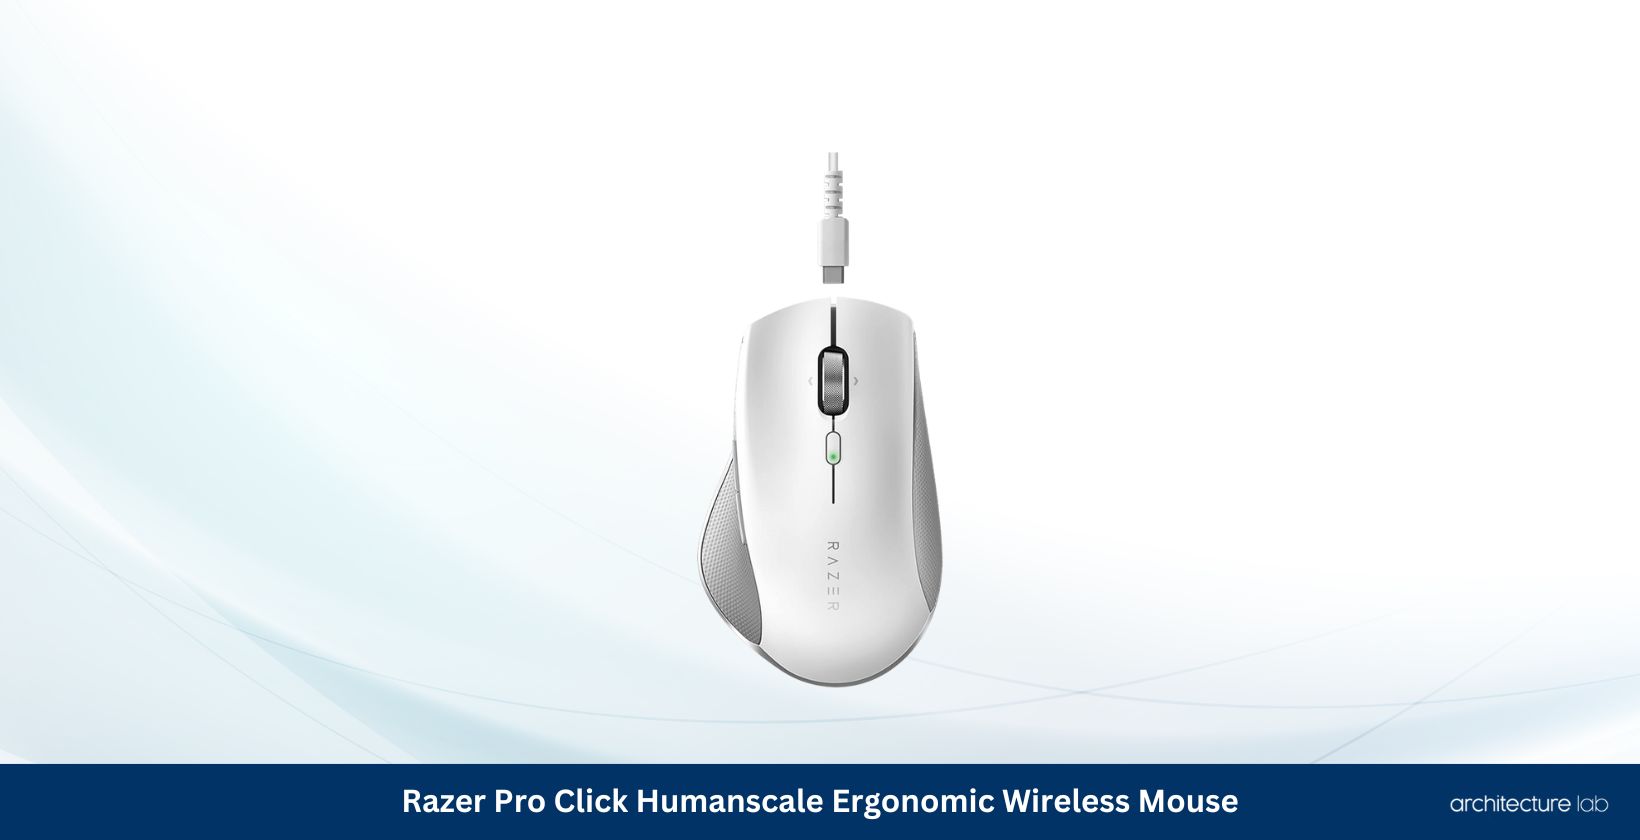 Razer pro click humanscale ergonomic wireless mouse